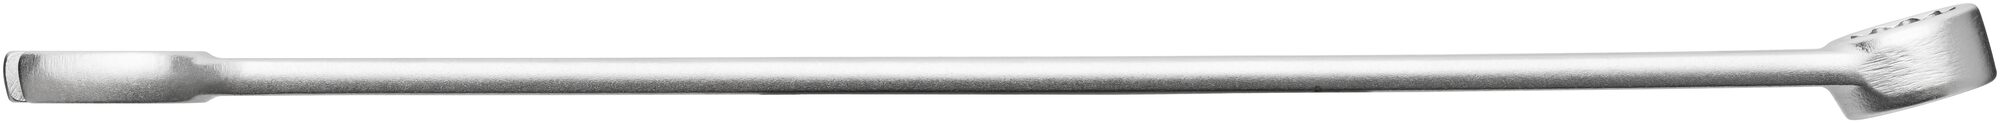 HAZET Ring-Maulschlüssel · extra lang · schlanke Bauform 600LG-22 · Außen Doppel-Sechskant-Tractionsprofil · 22 mm